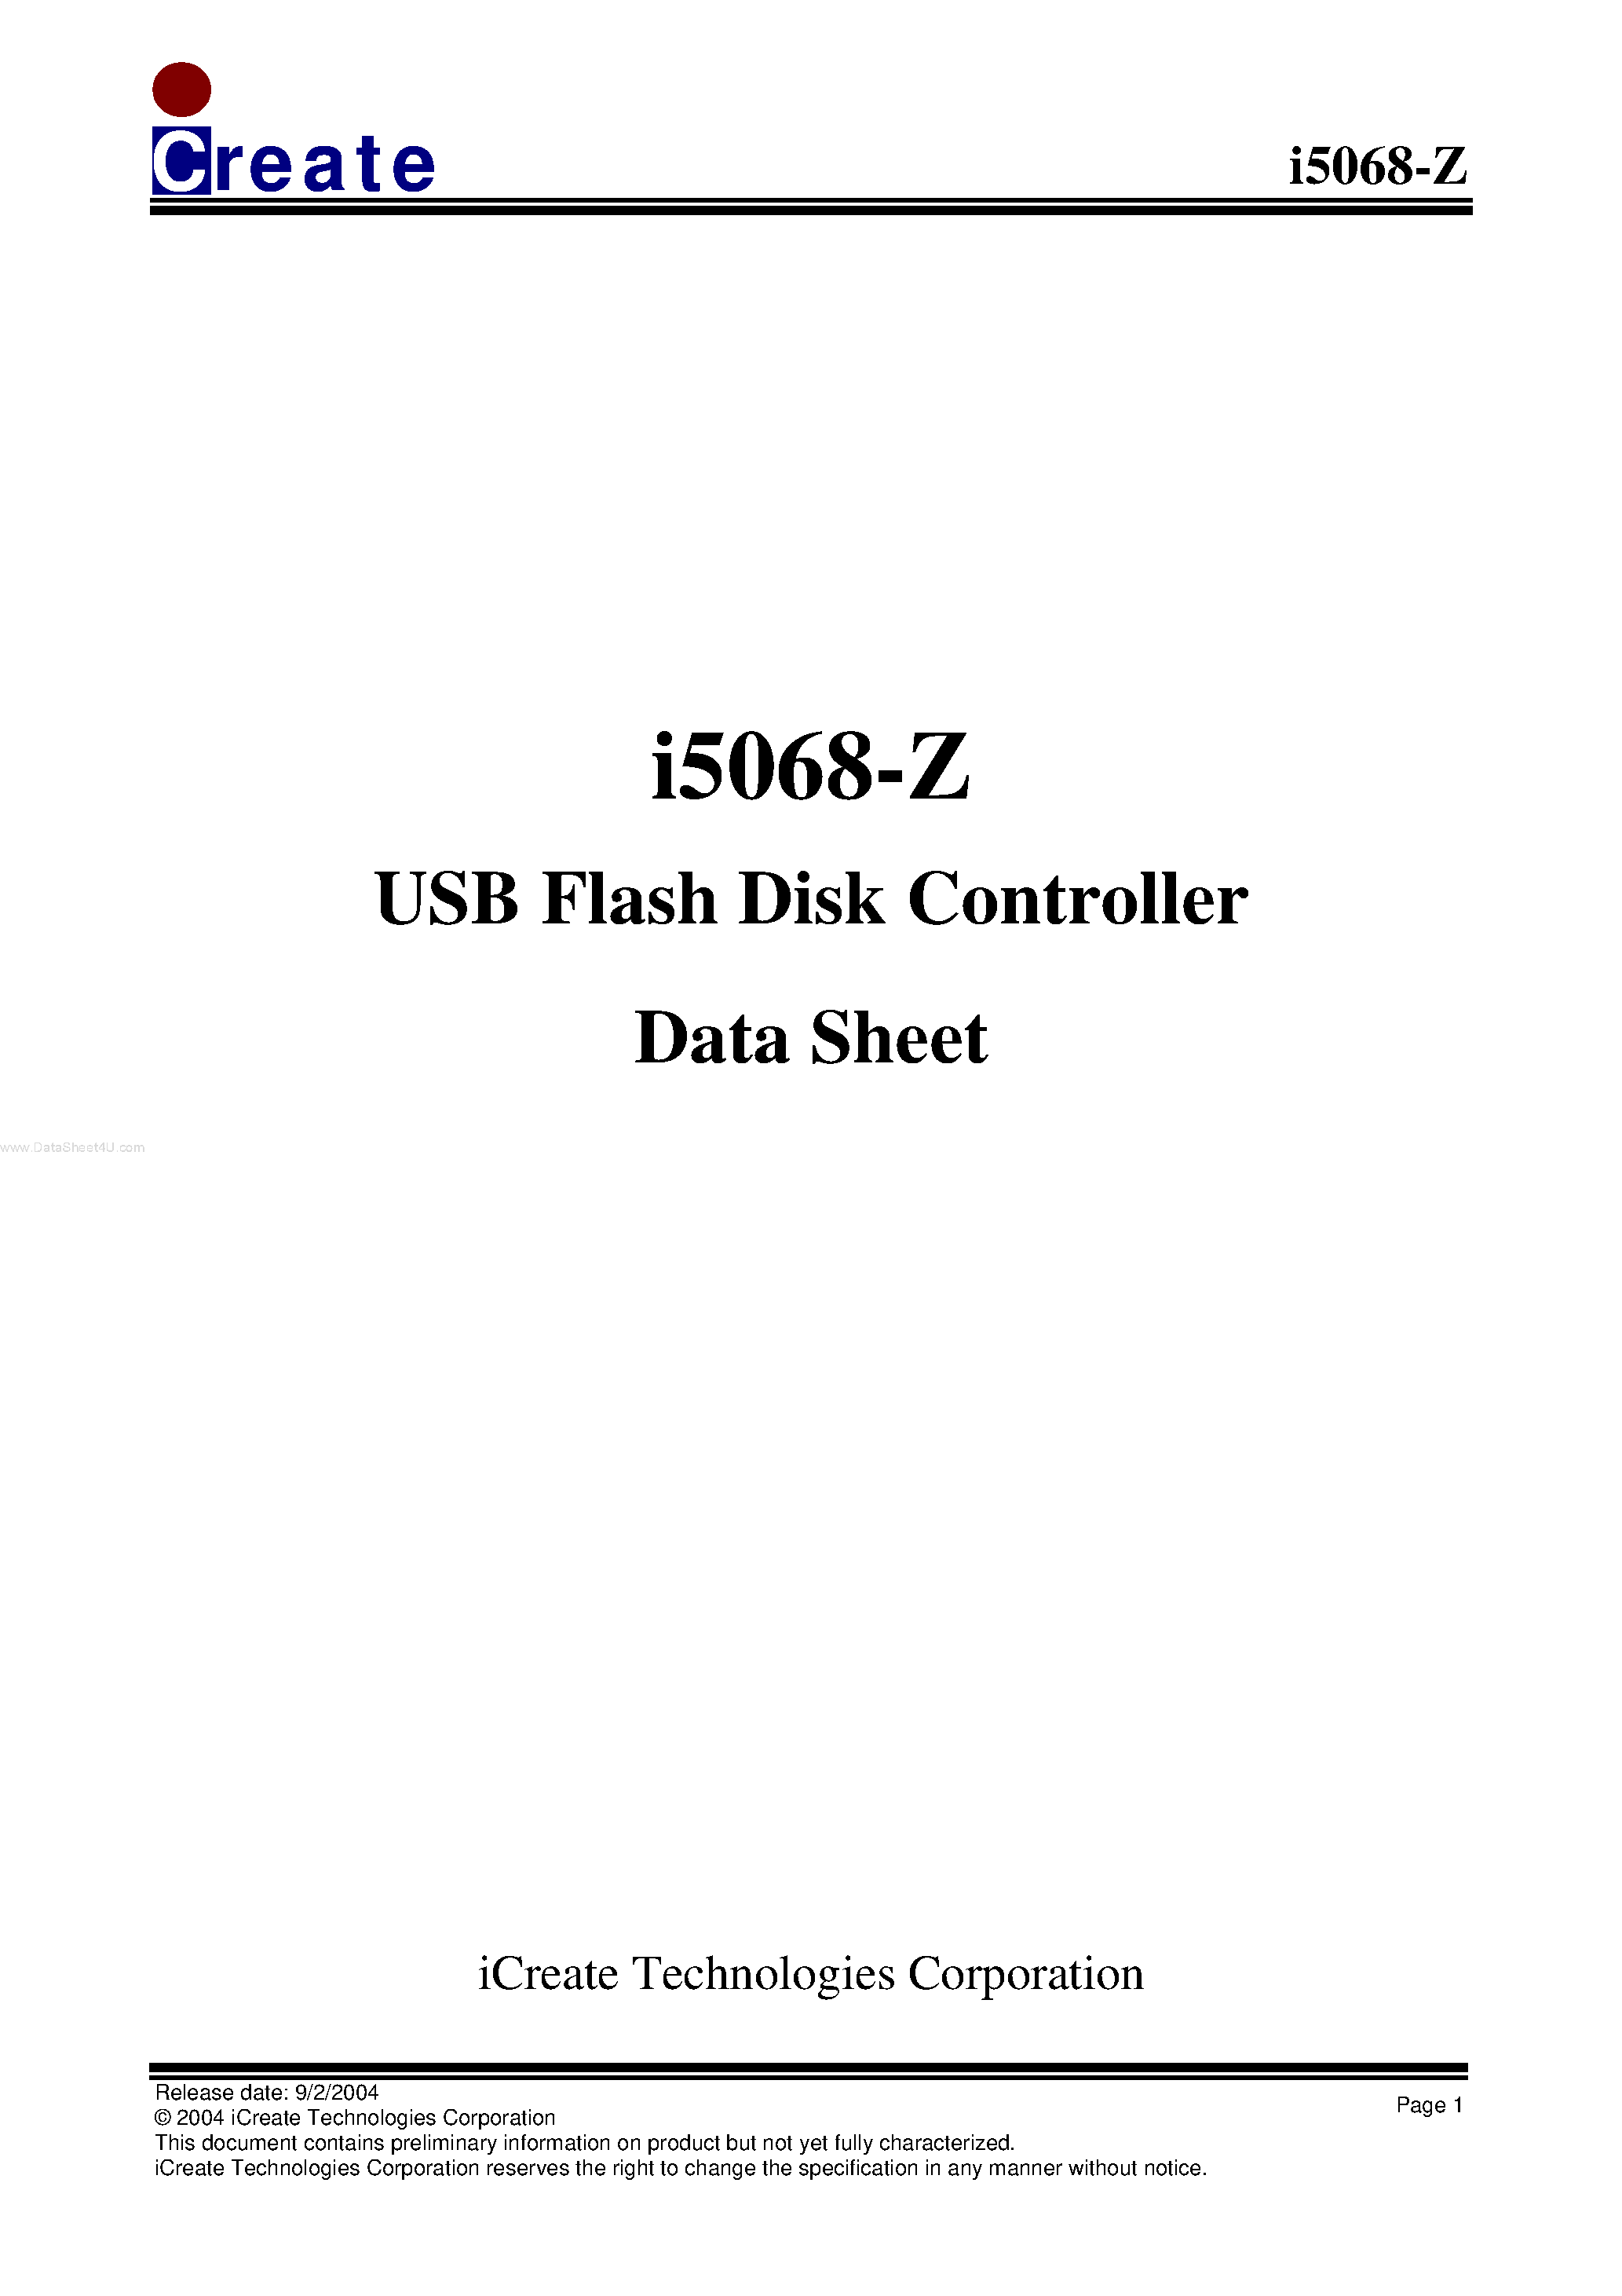 Даташит I5068-Z - USB Flash Disk Controller страница 1